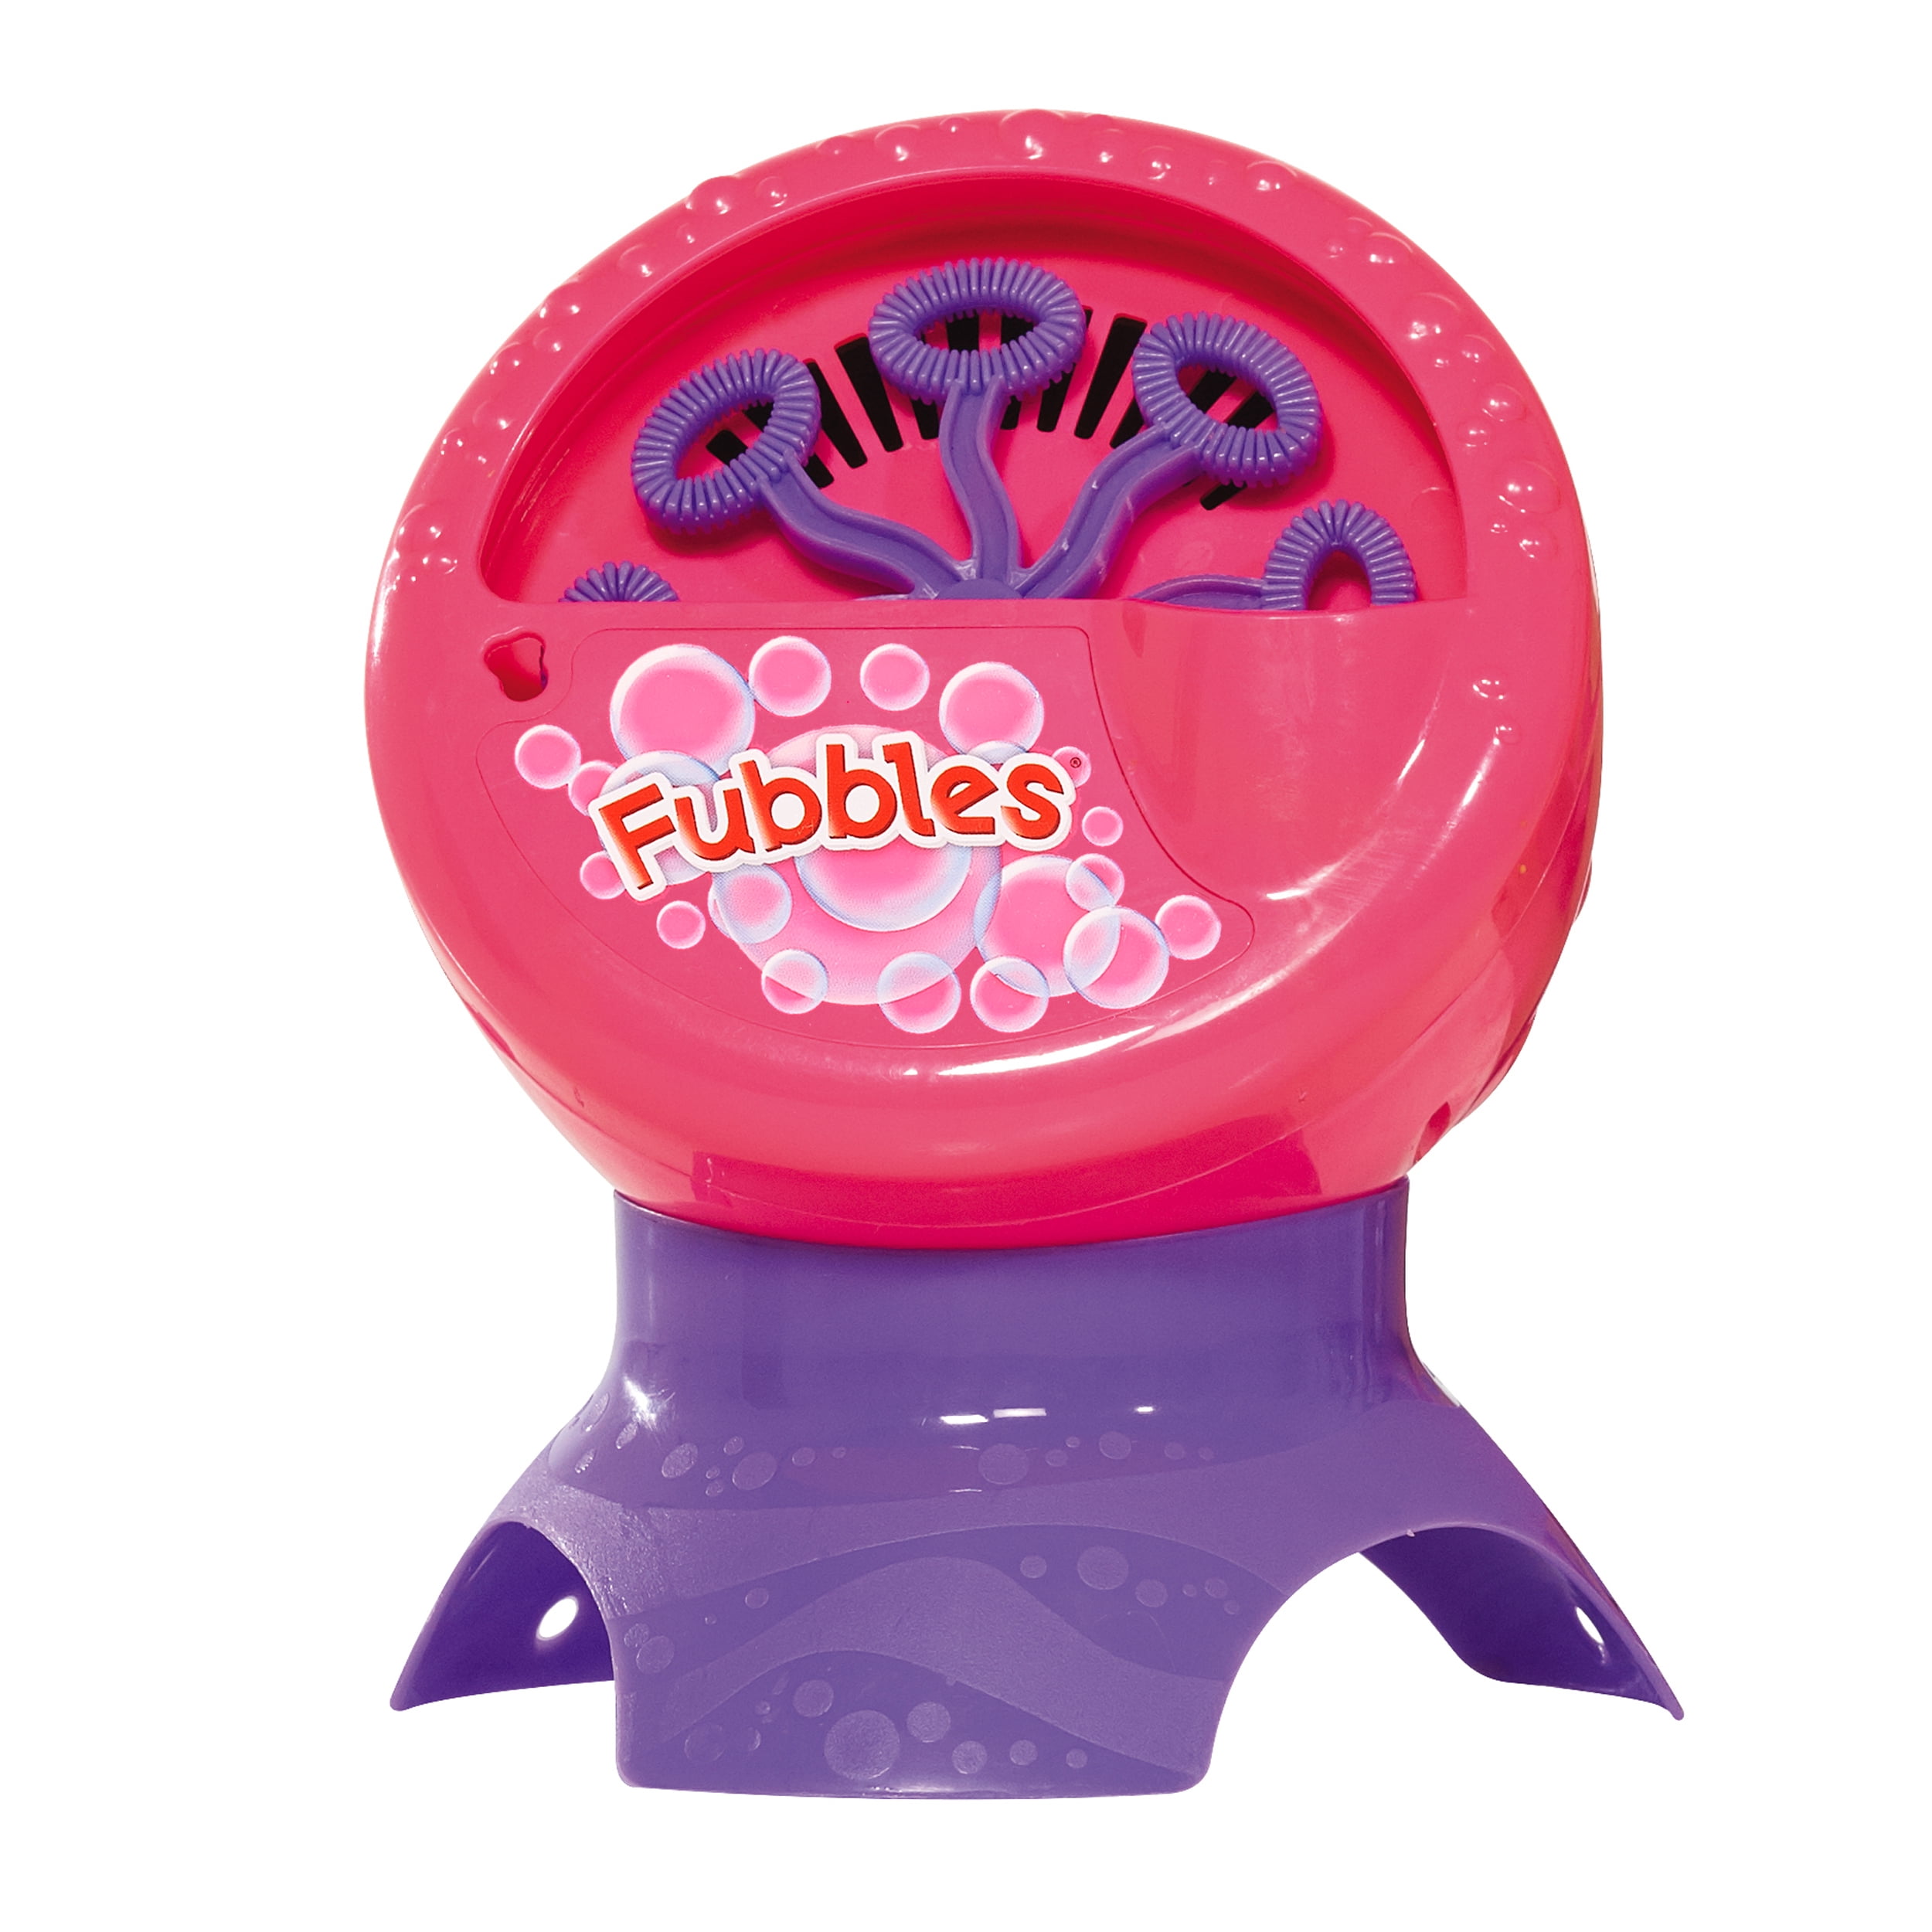 The Fubbles Mini Bubble Machine Blasts Amazing Amounts Of Bubbles! 